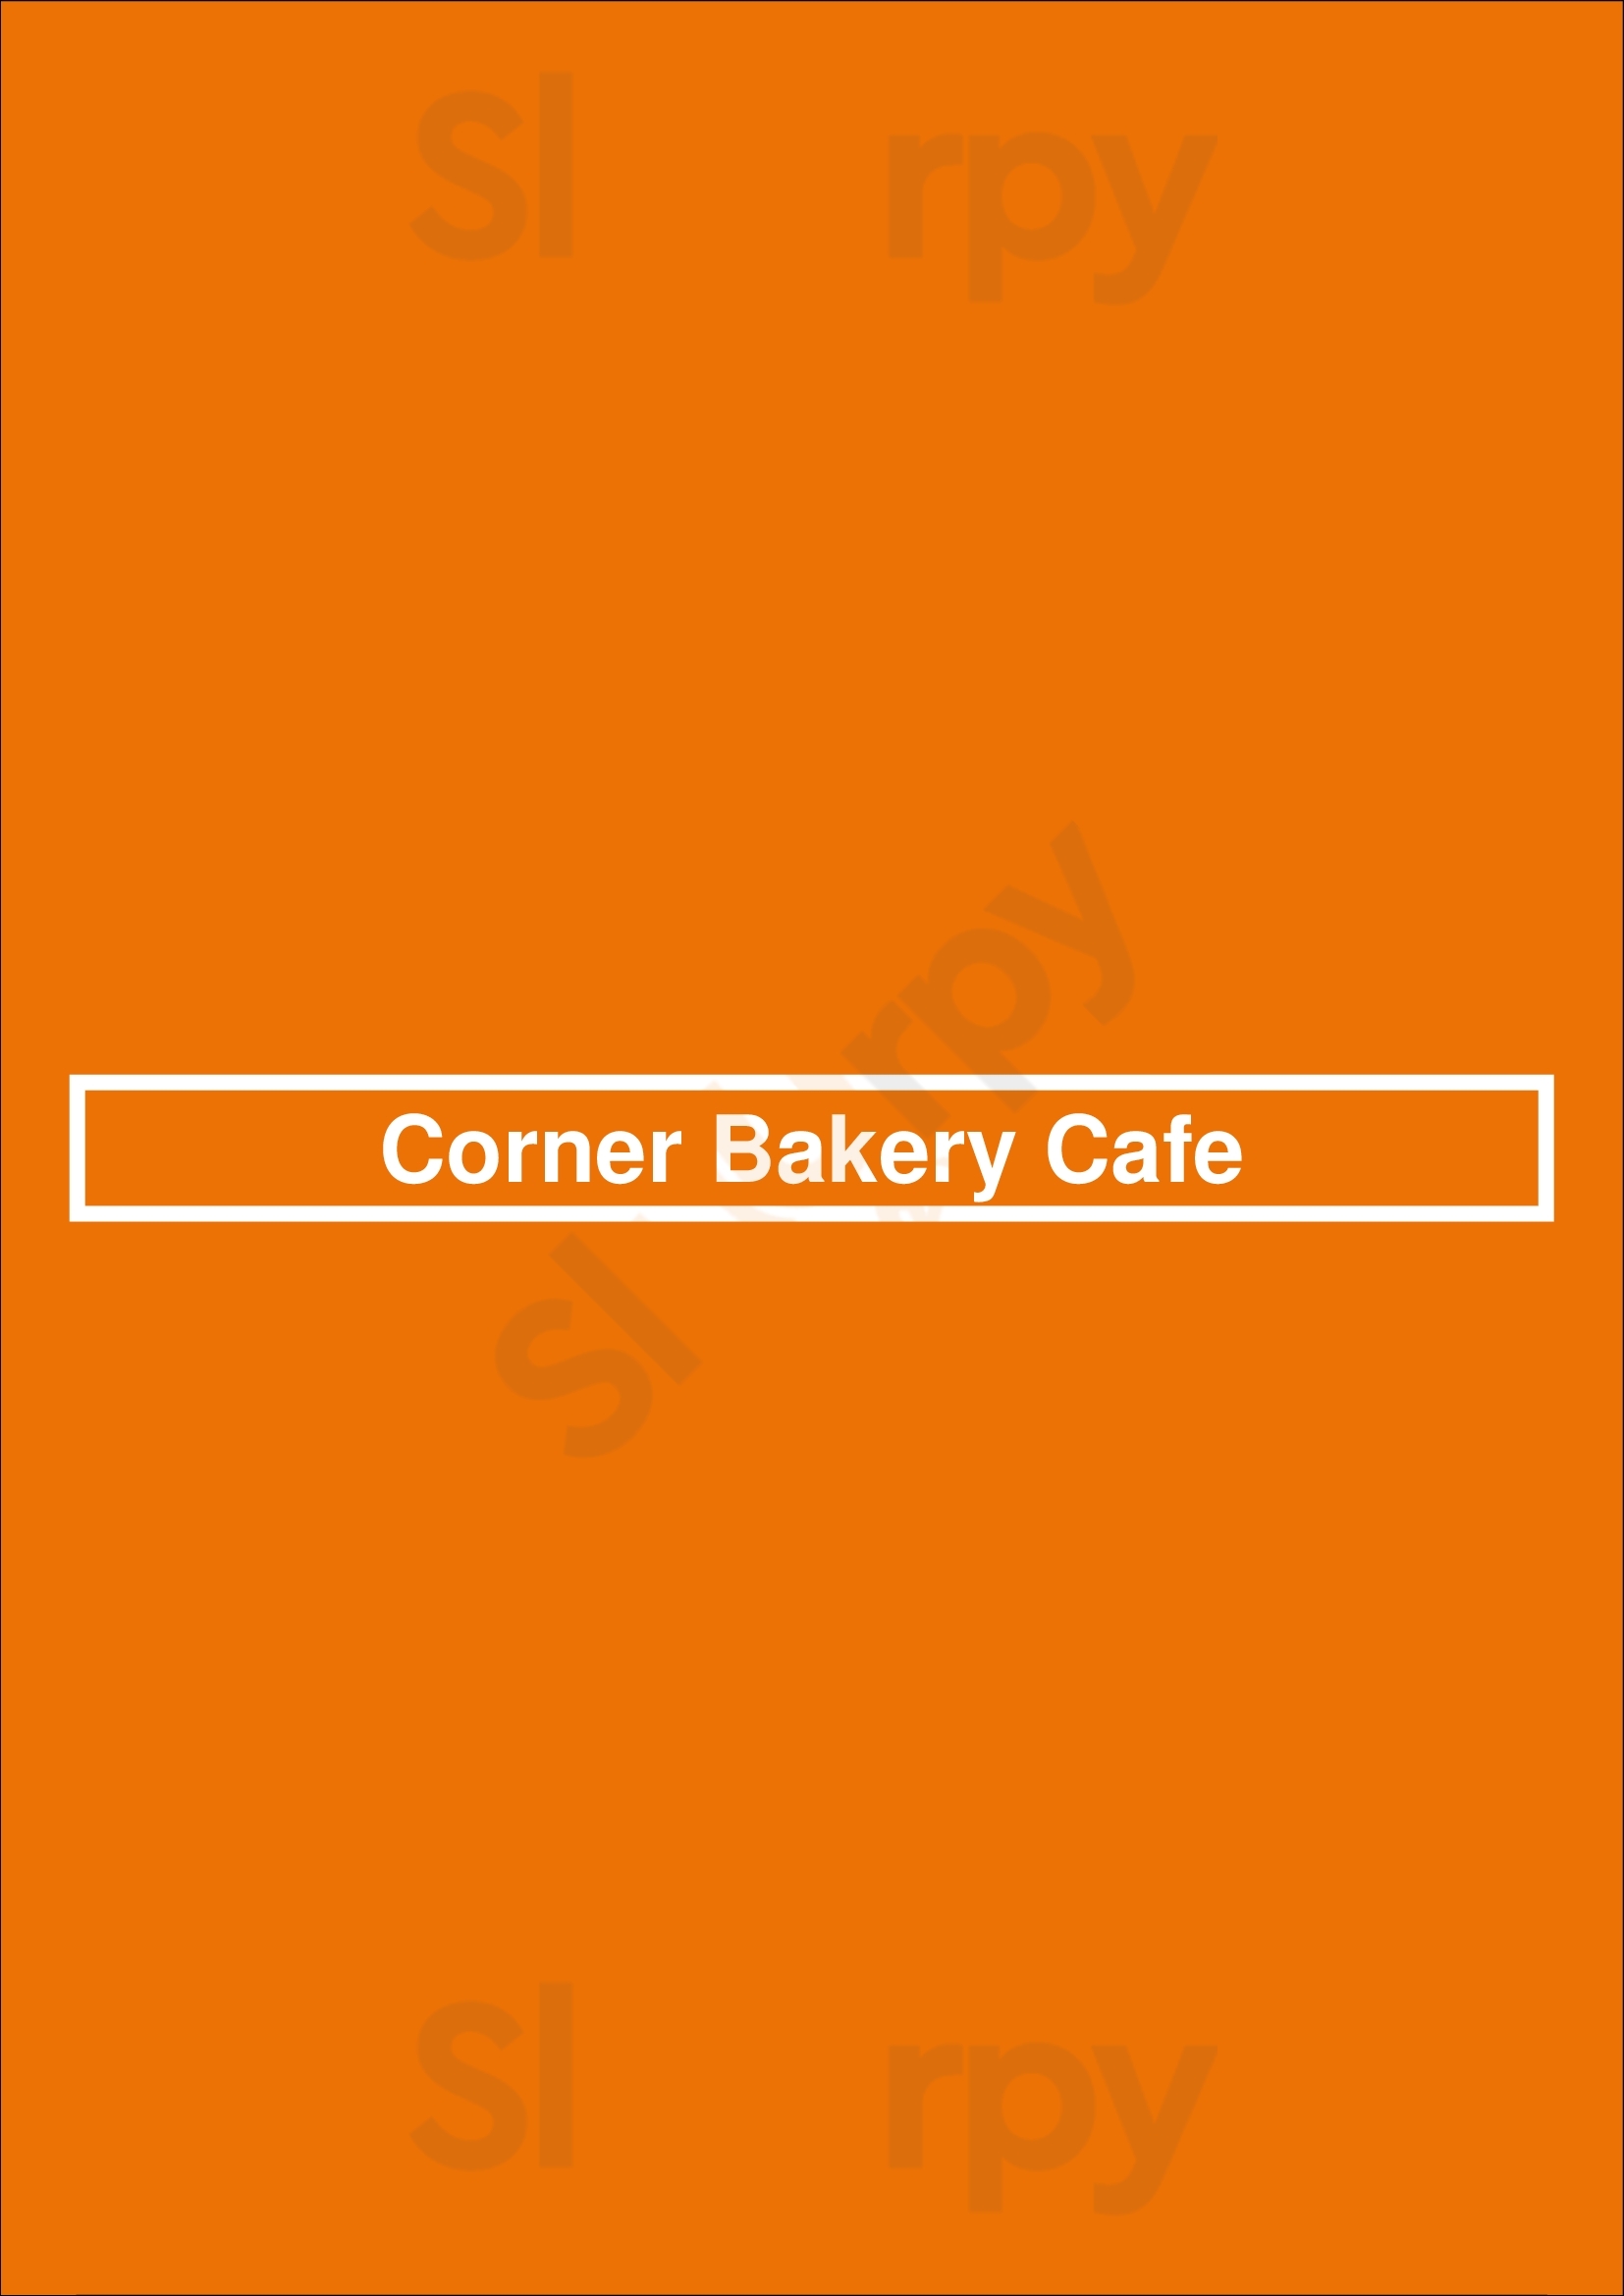 Corner Bakery Cafe Atlanta Menu - 1